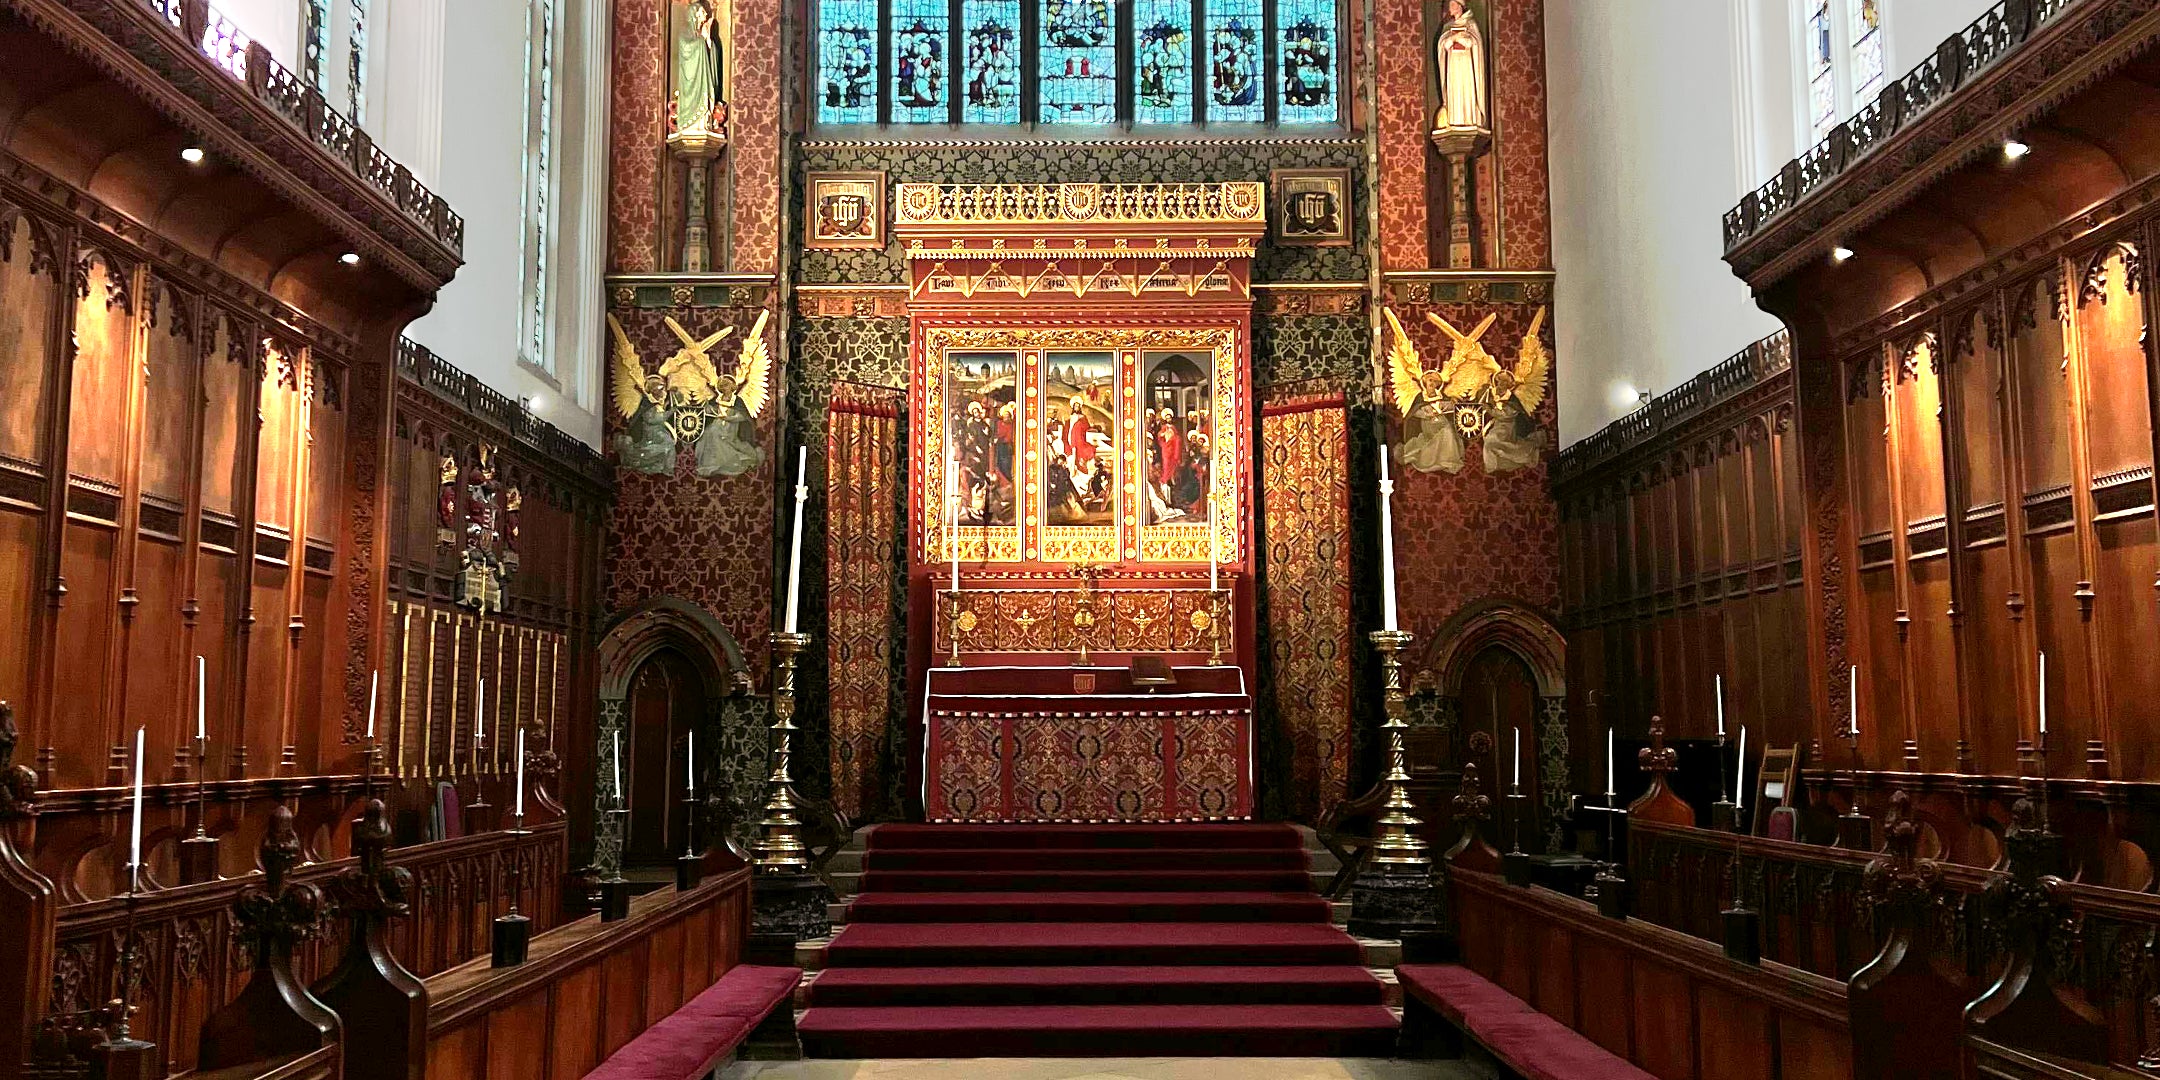 Altar frontal